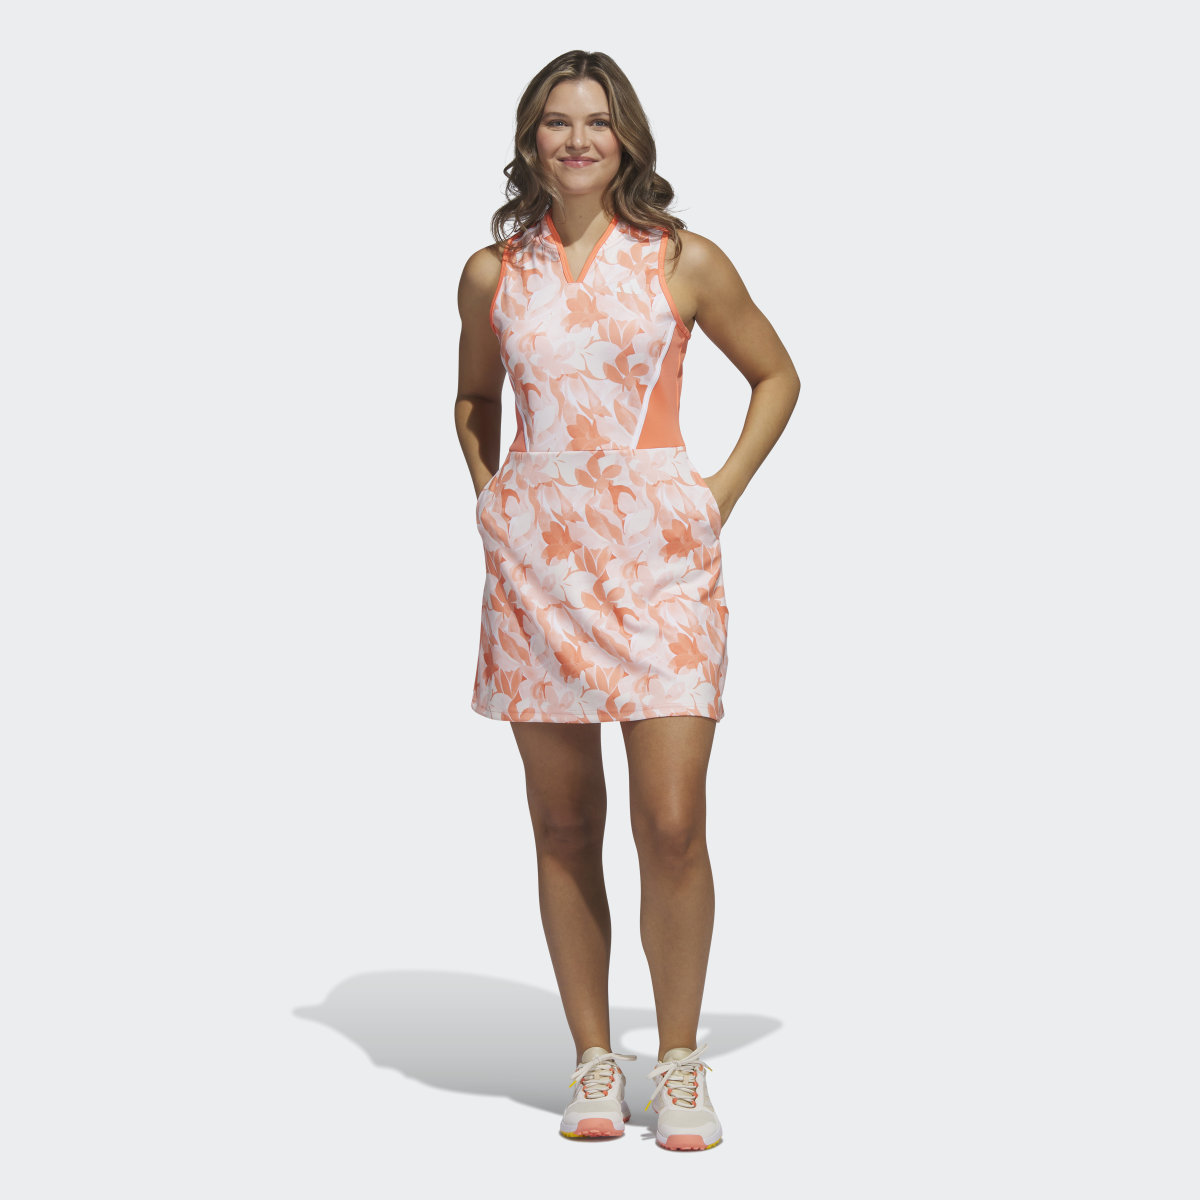 Adidas Floral Golf Dress. 10